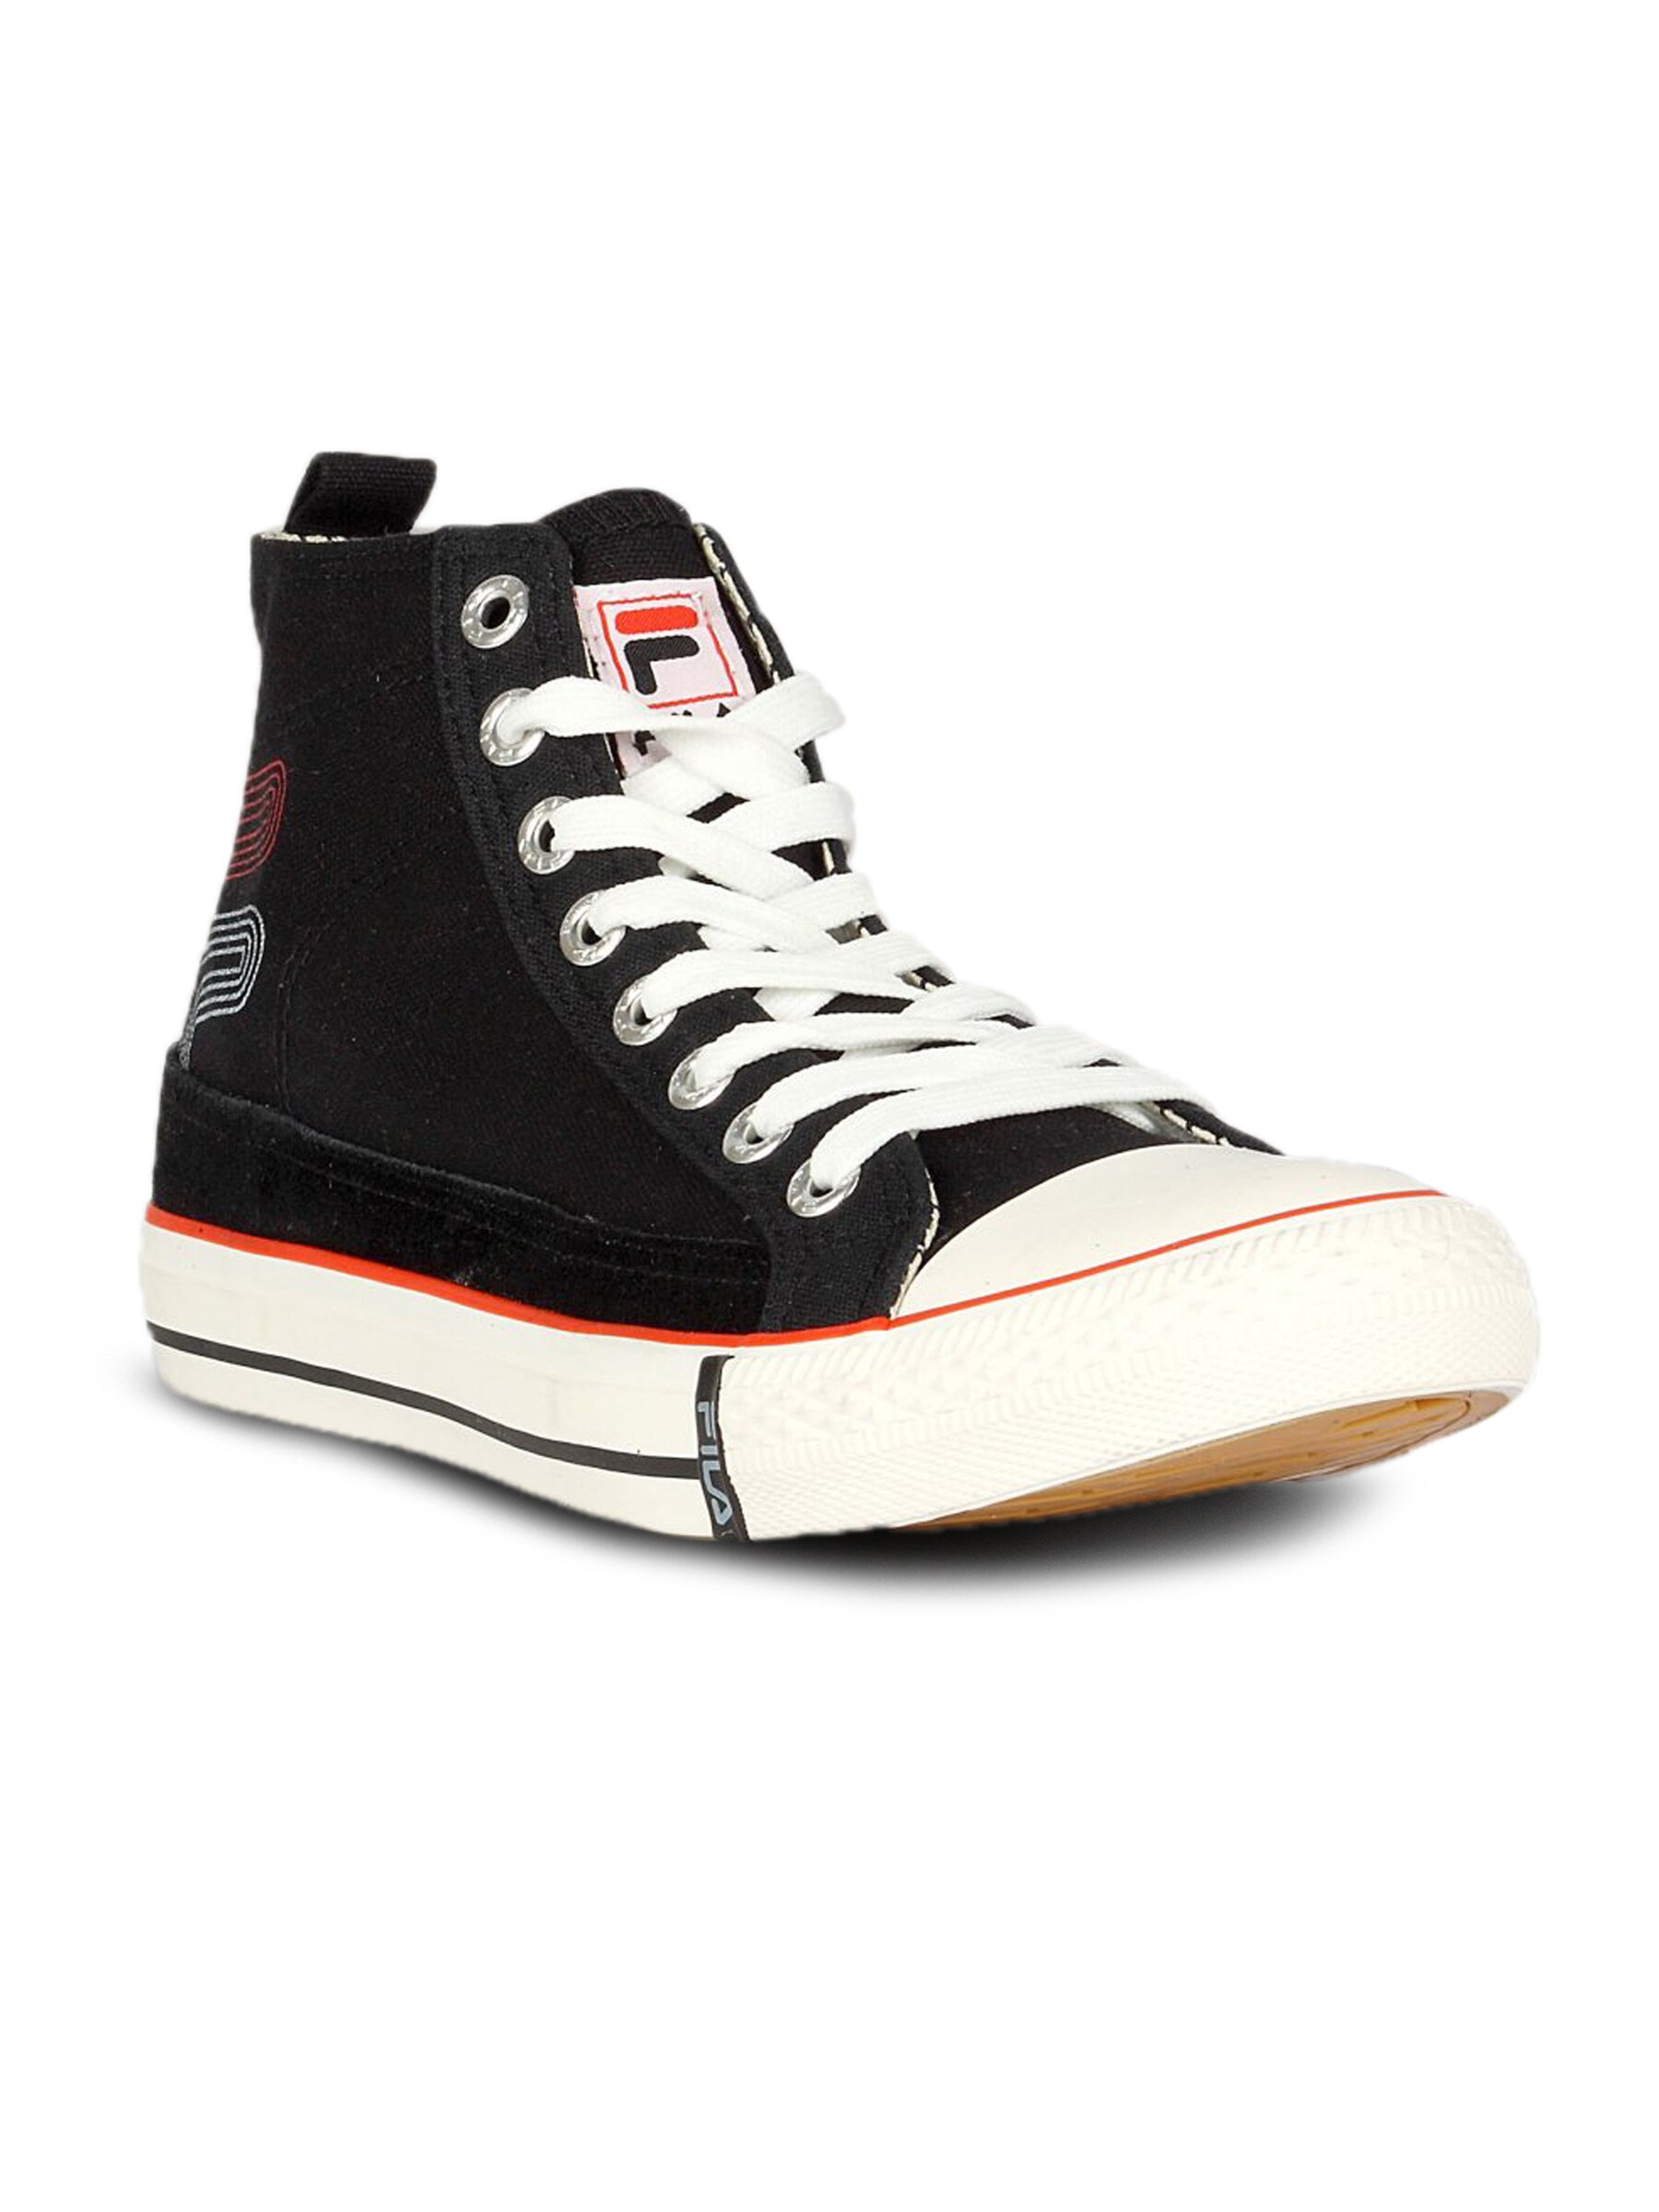 Fila Men's Maverick HI Black Red Canvas Shoe